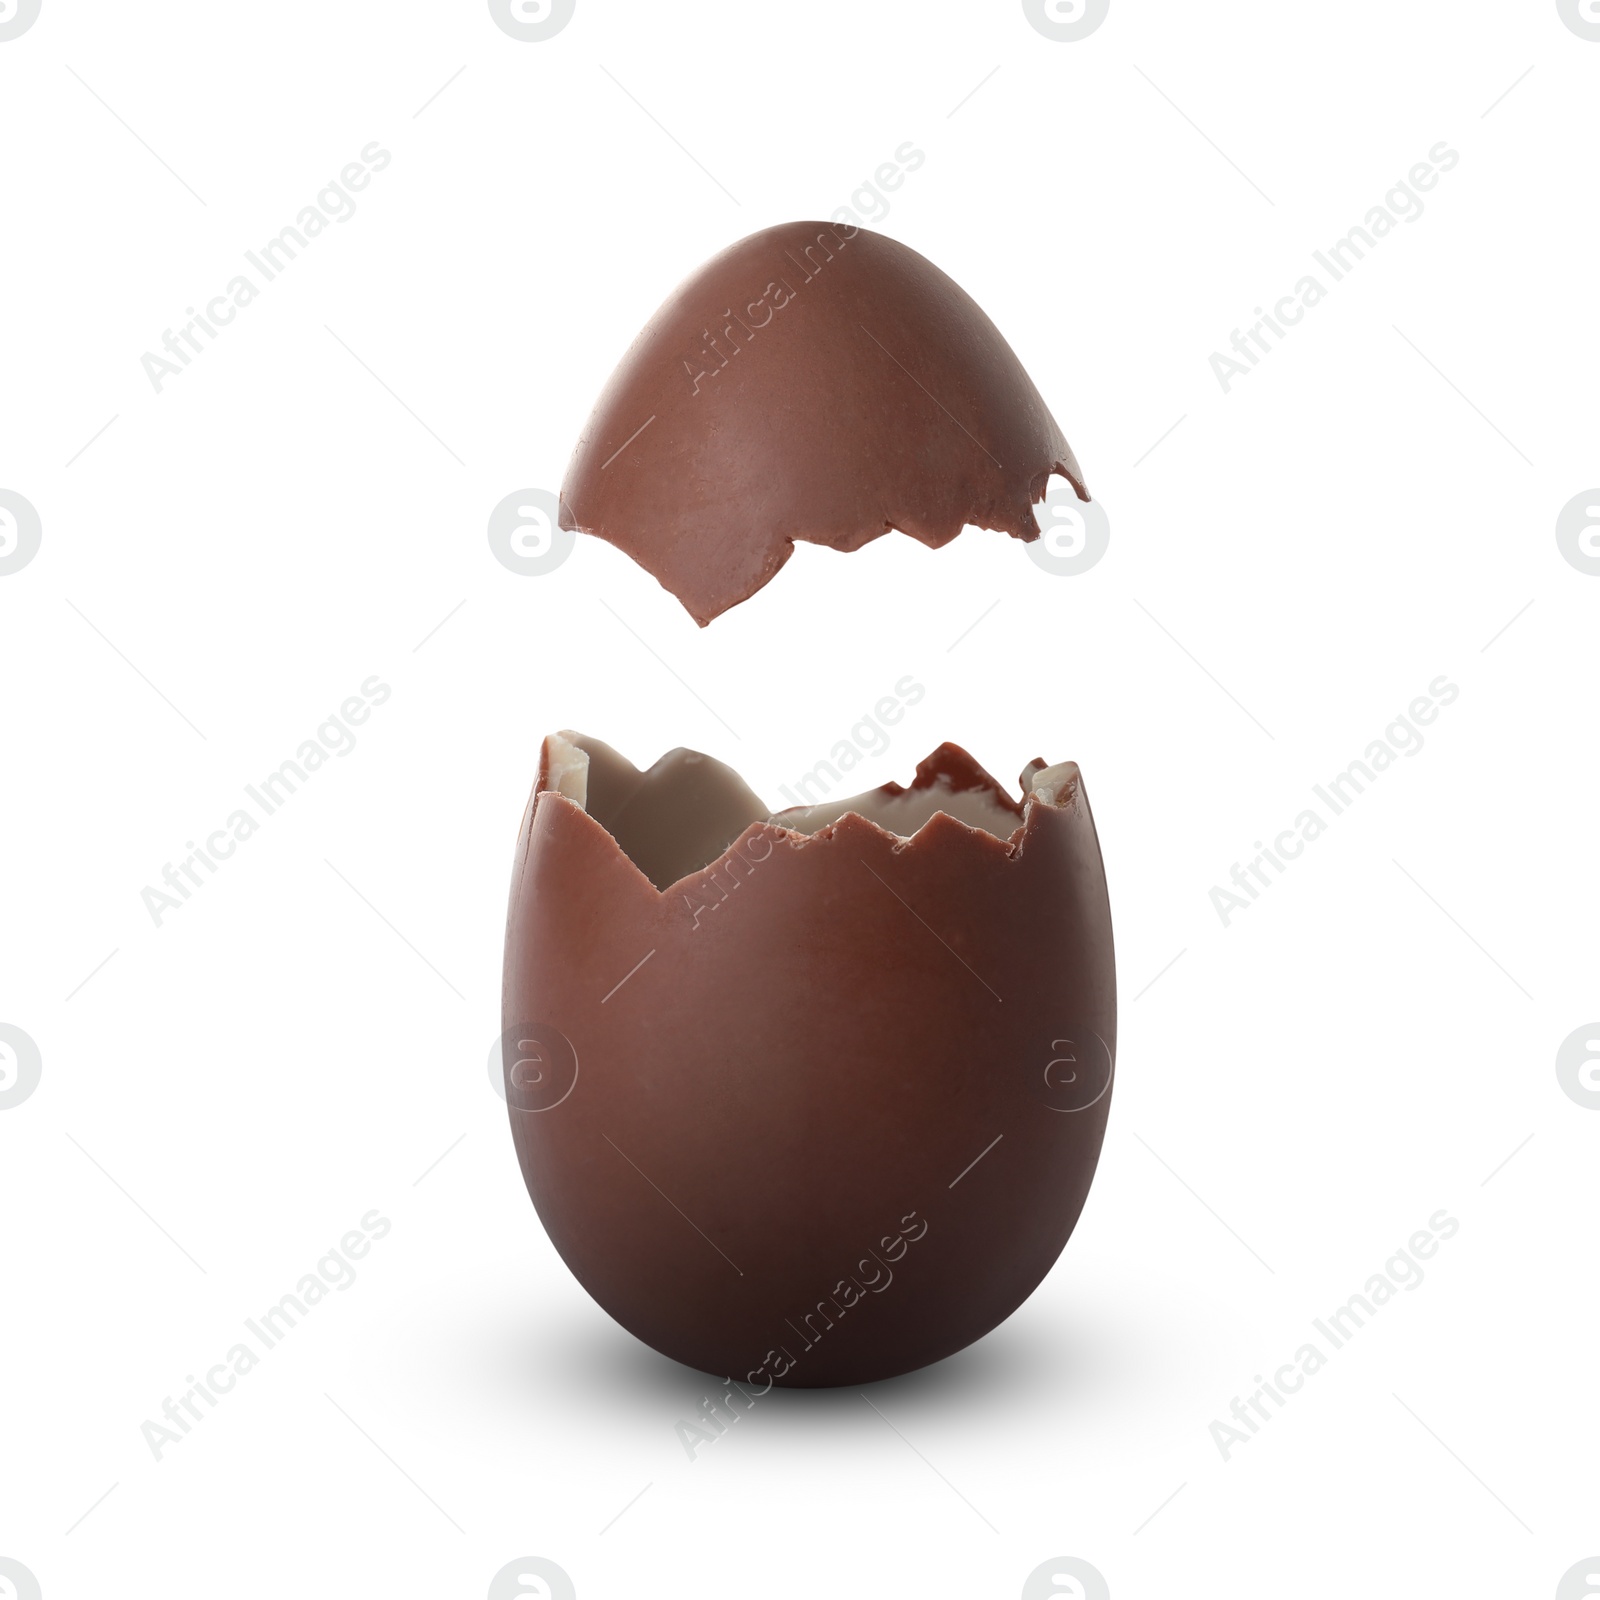 Image of Broken milk chocolate egg on white background